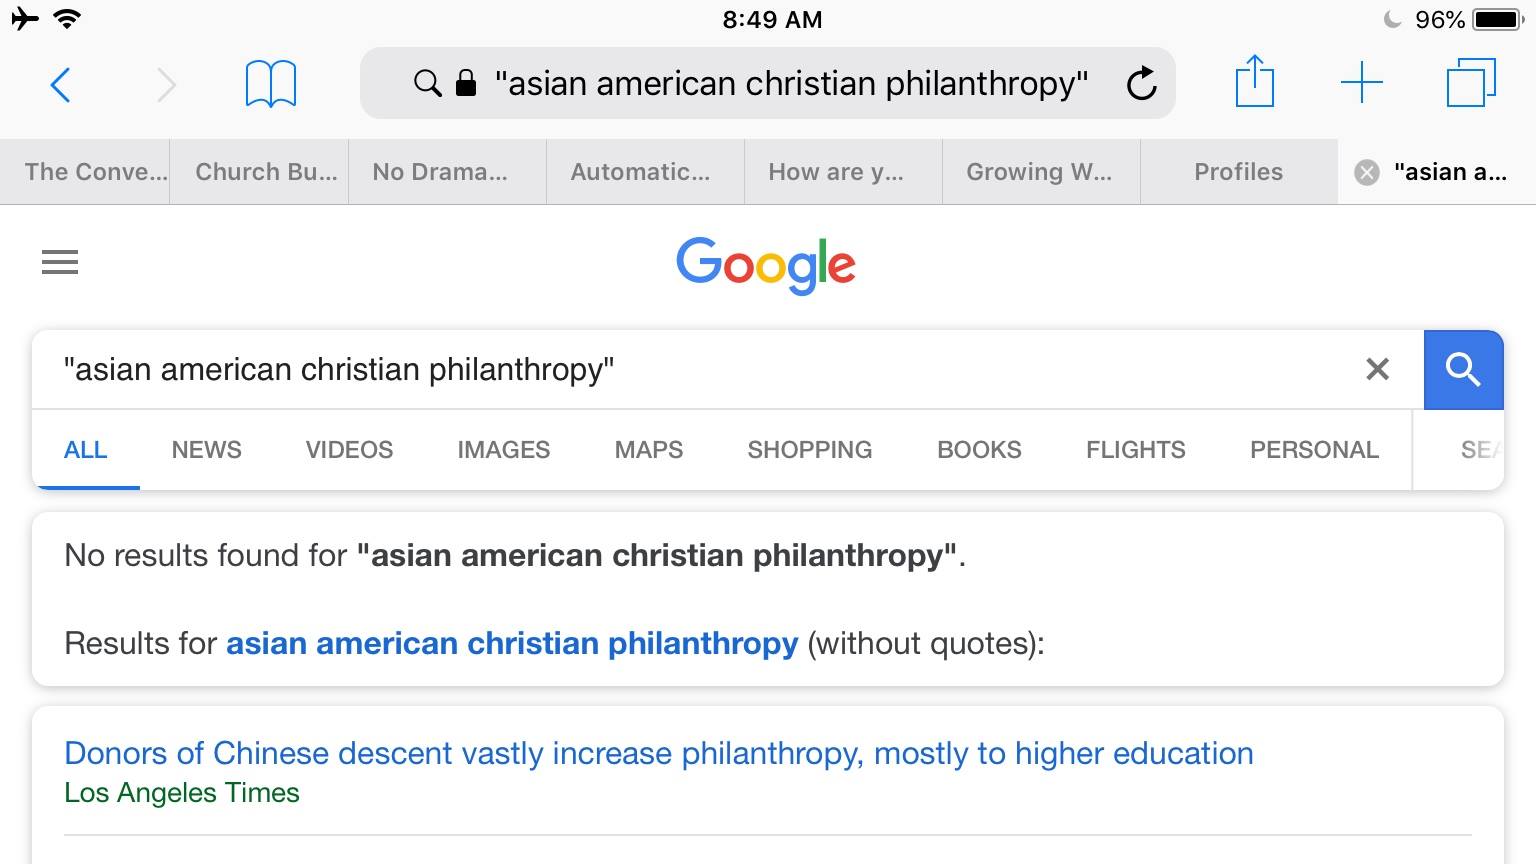 Asian American Christian philanthropy